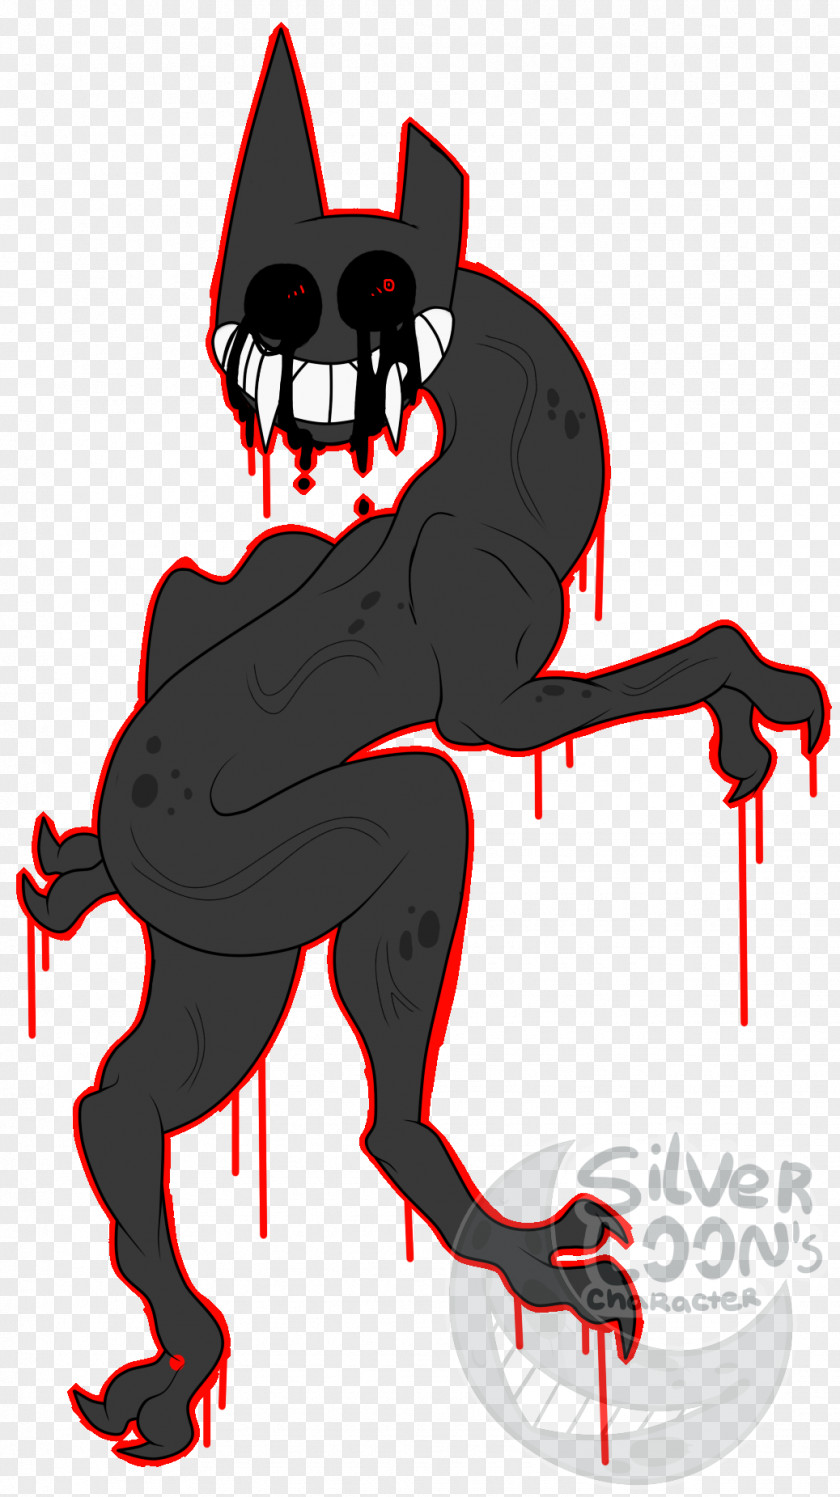 Creeper Guy Clip Art Black Silhouette Cartoon Legendary Creature PNG